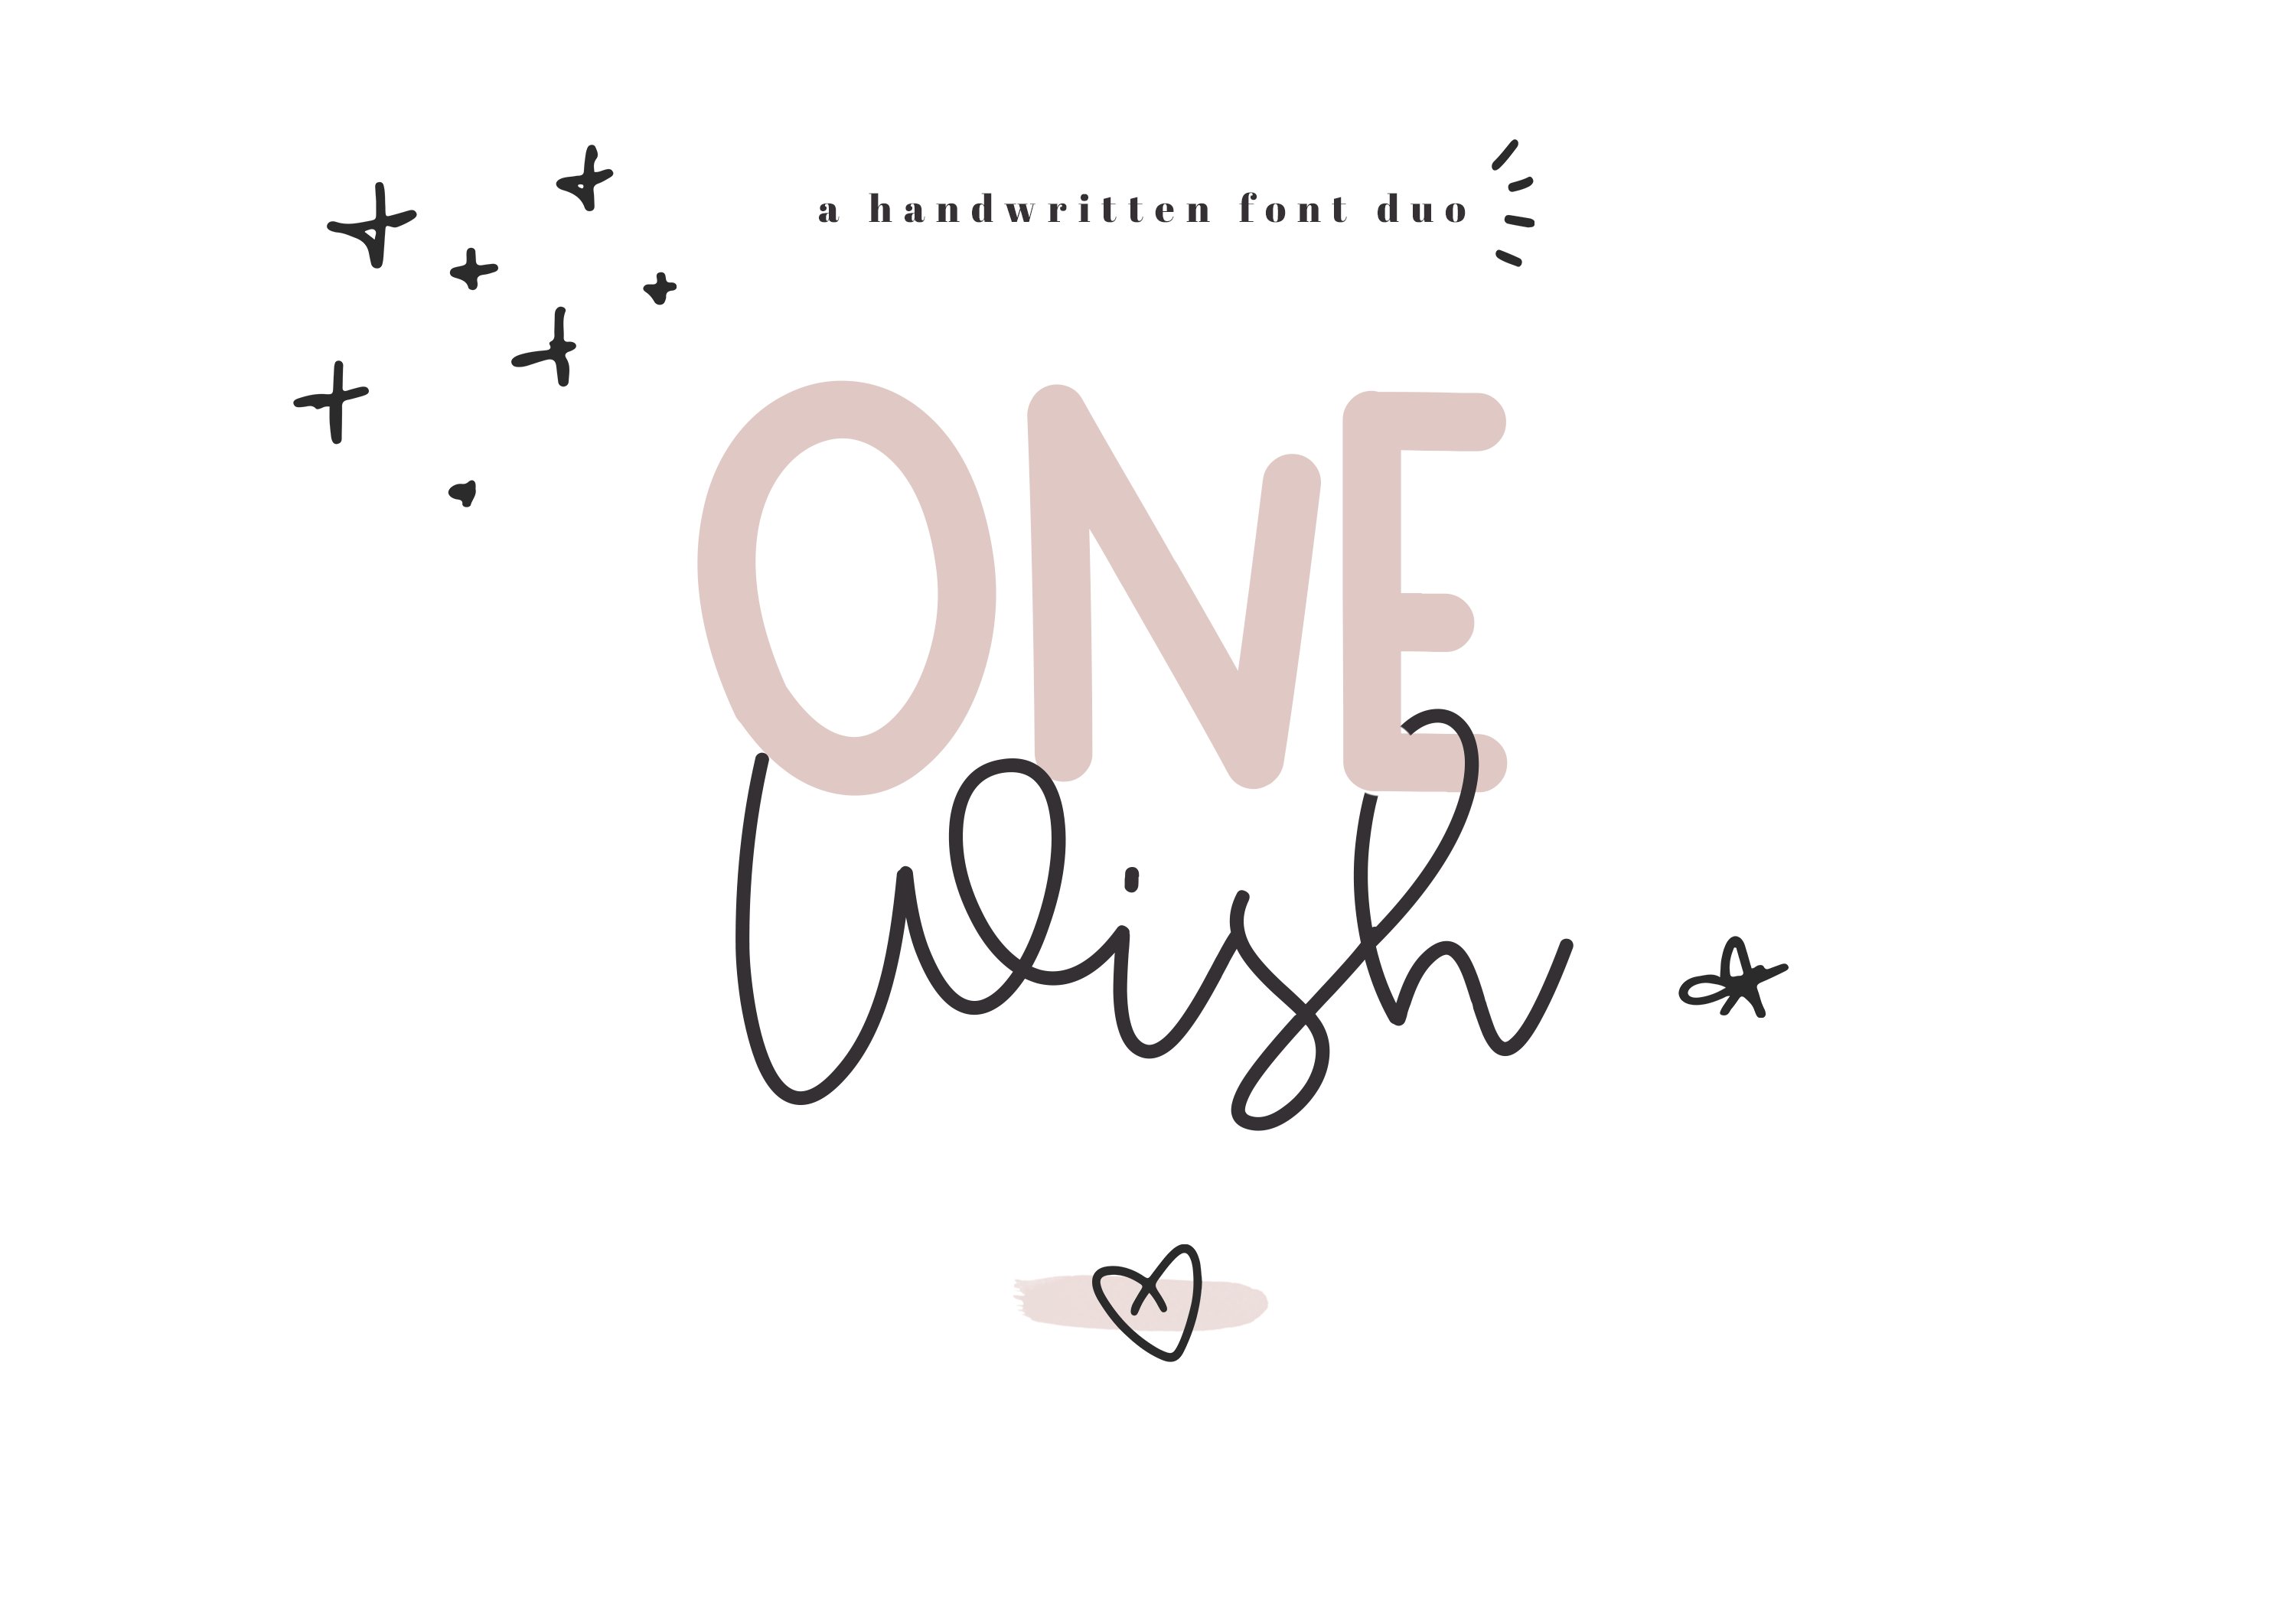 One Wish - Handwritten Font Duo cover image.